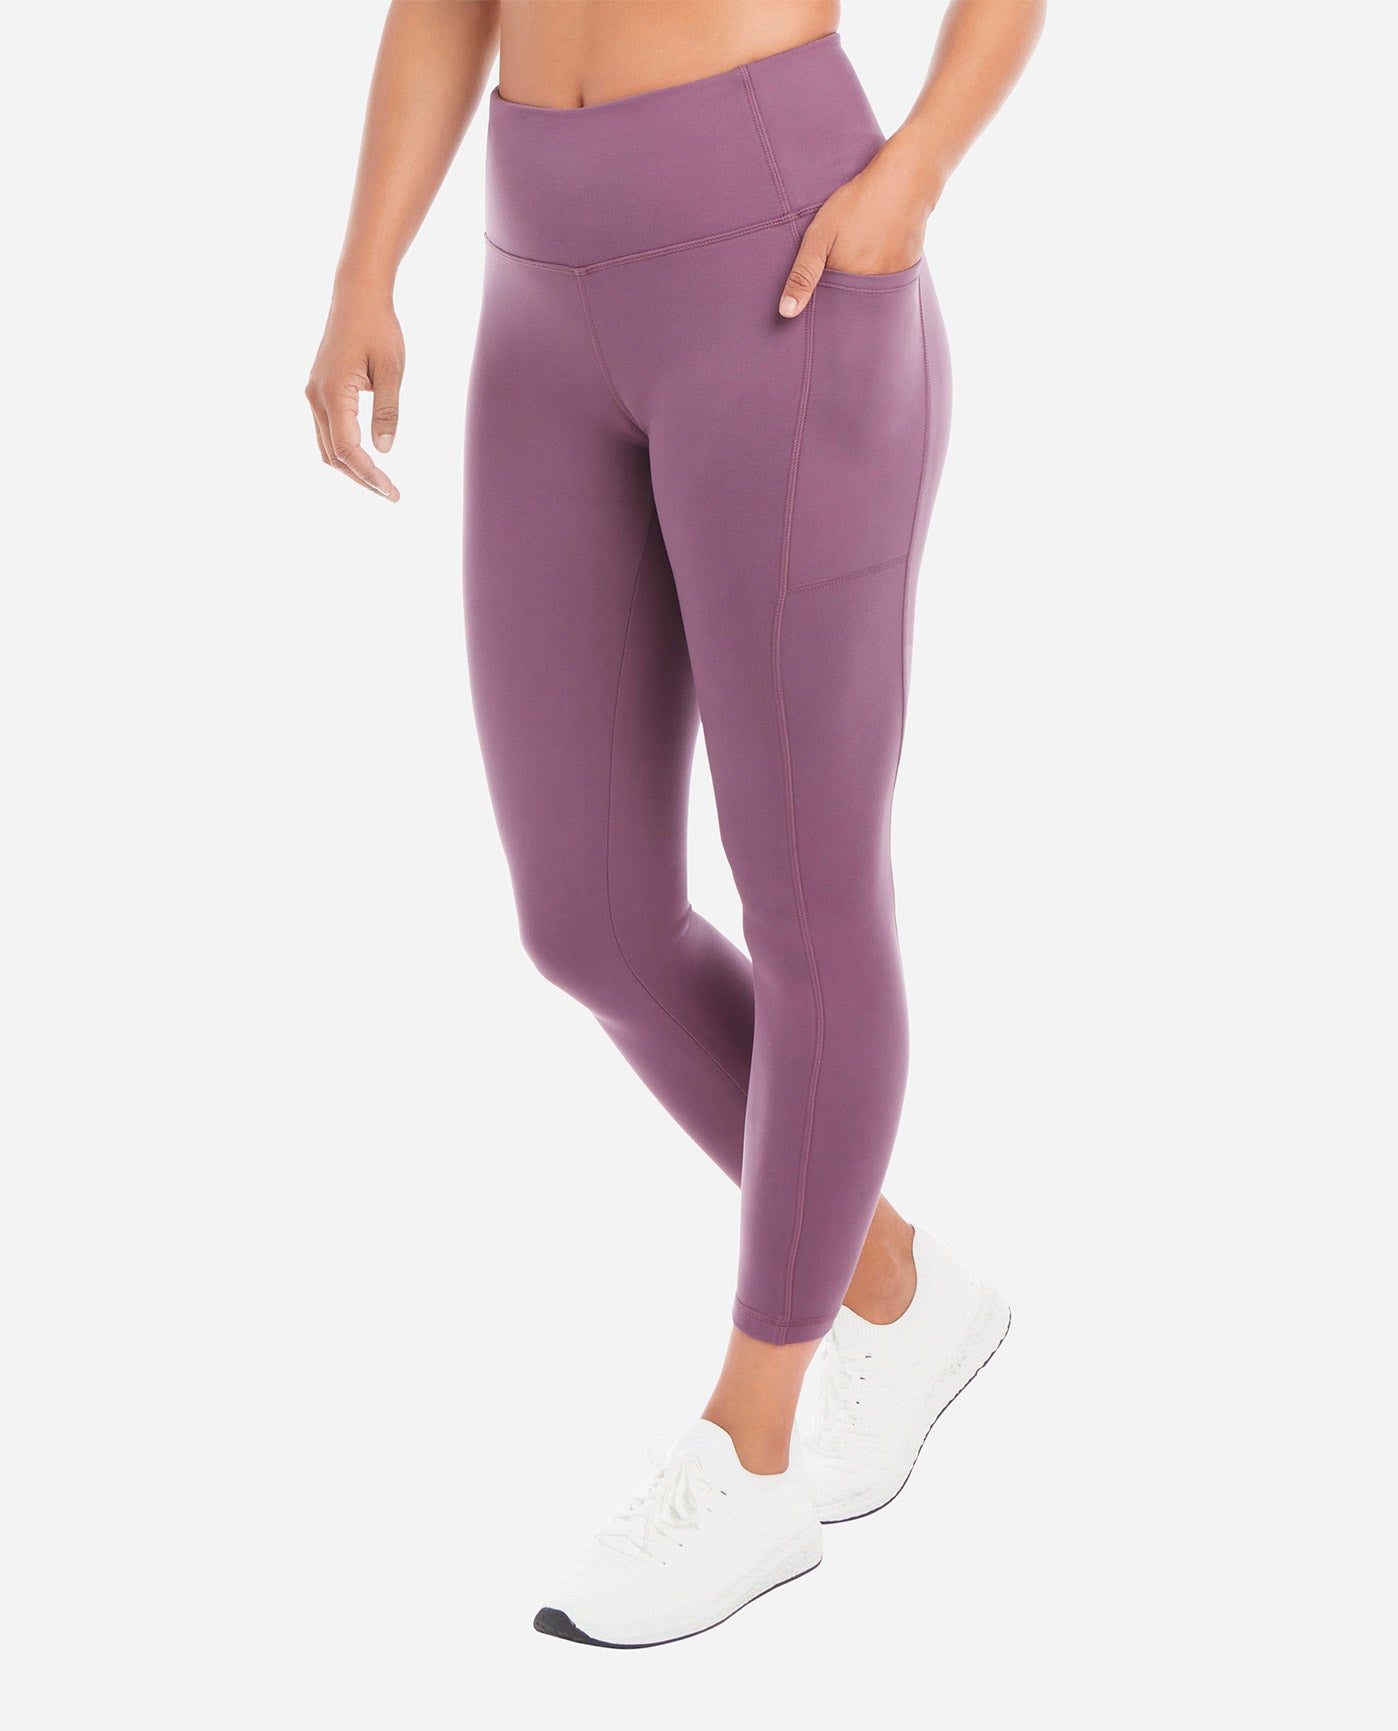 Danskin Grey and Purple Exercise Leggings Size Small